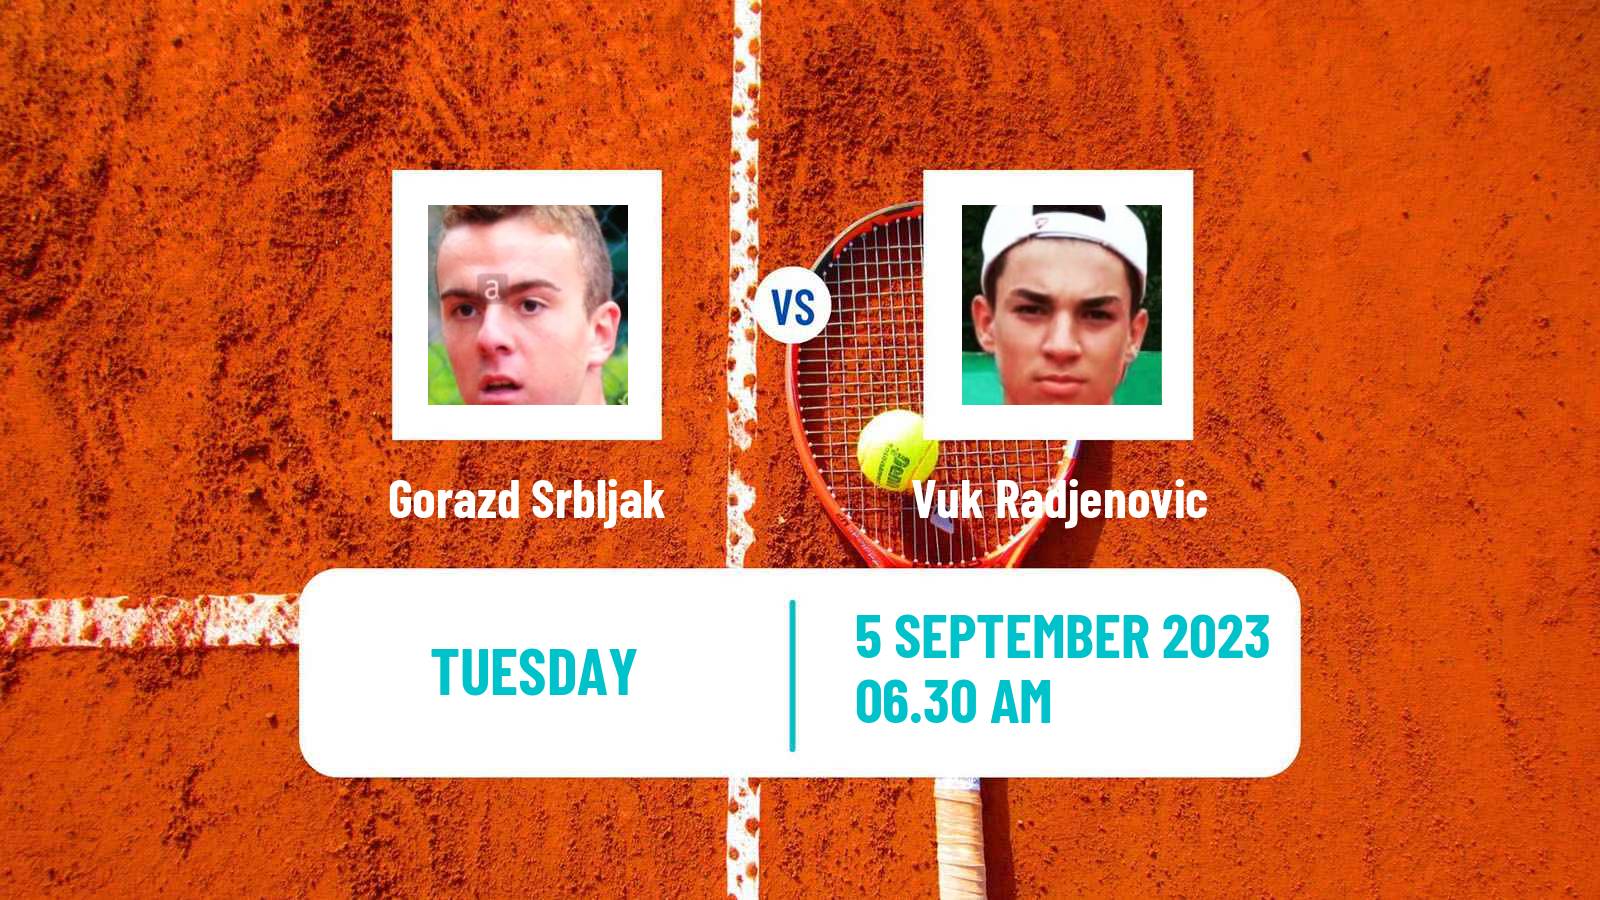 Tennis ITF M15 Pirot Men Gorazd Srbljak - Vuk Radjenovic